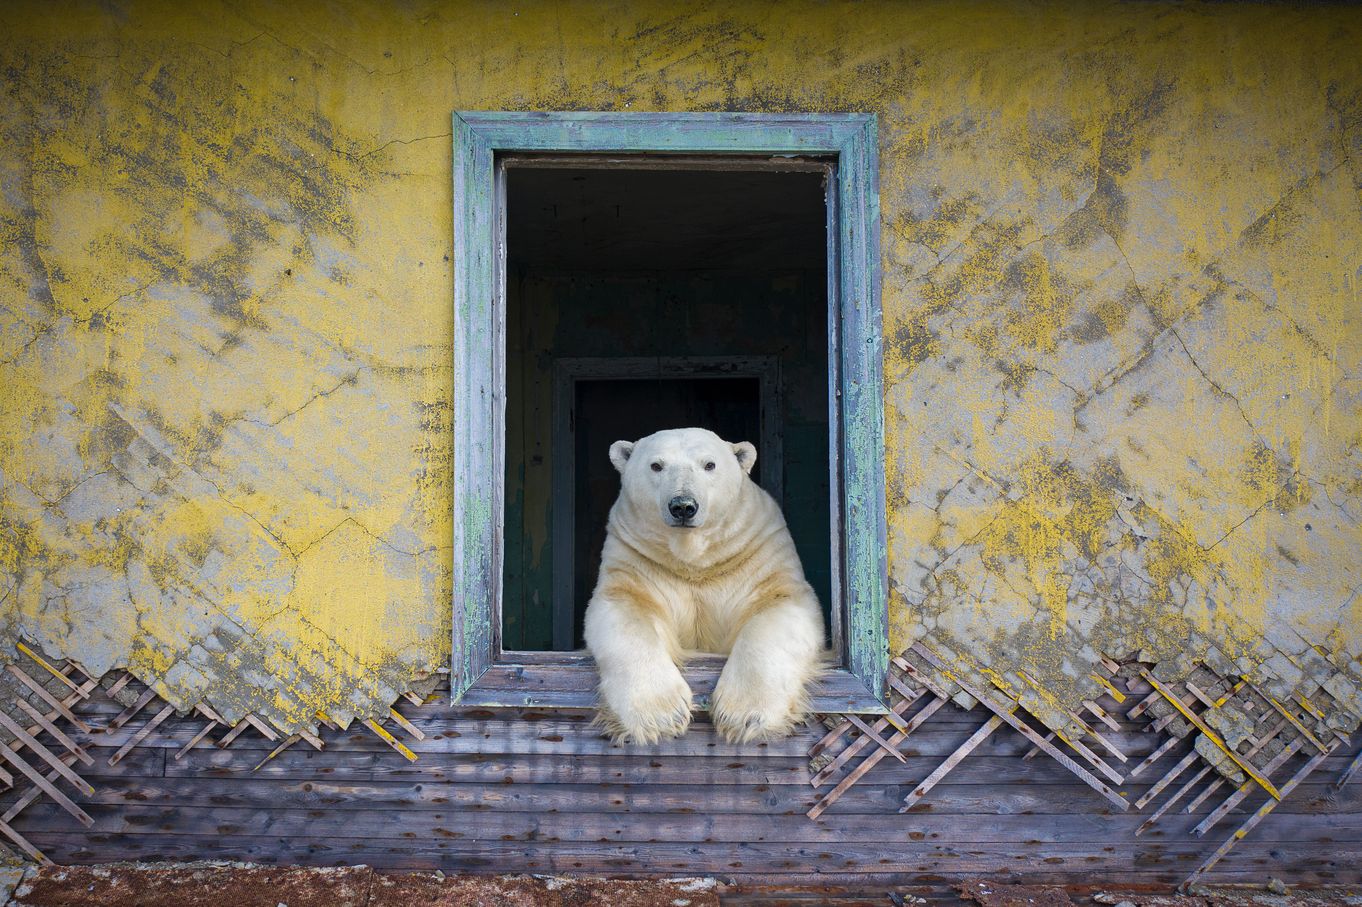 Polar bear in a window